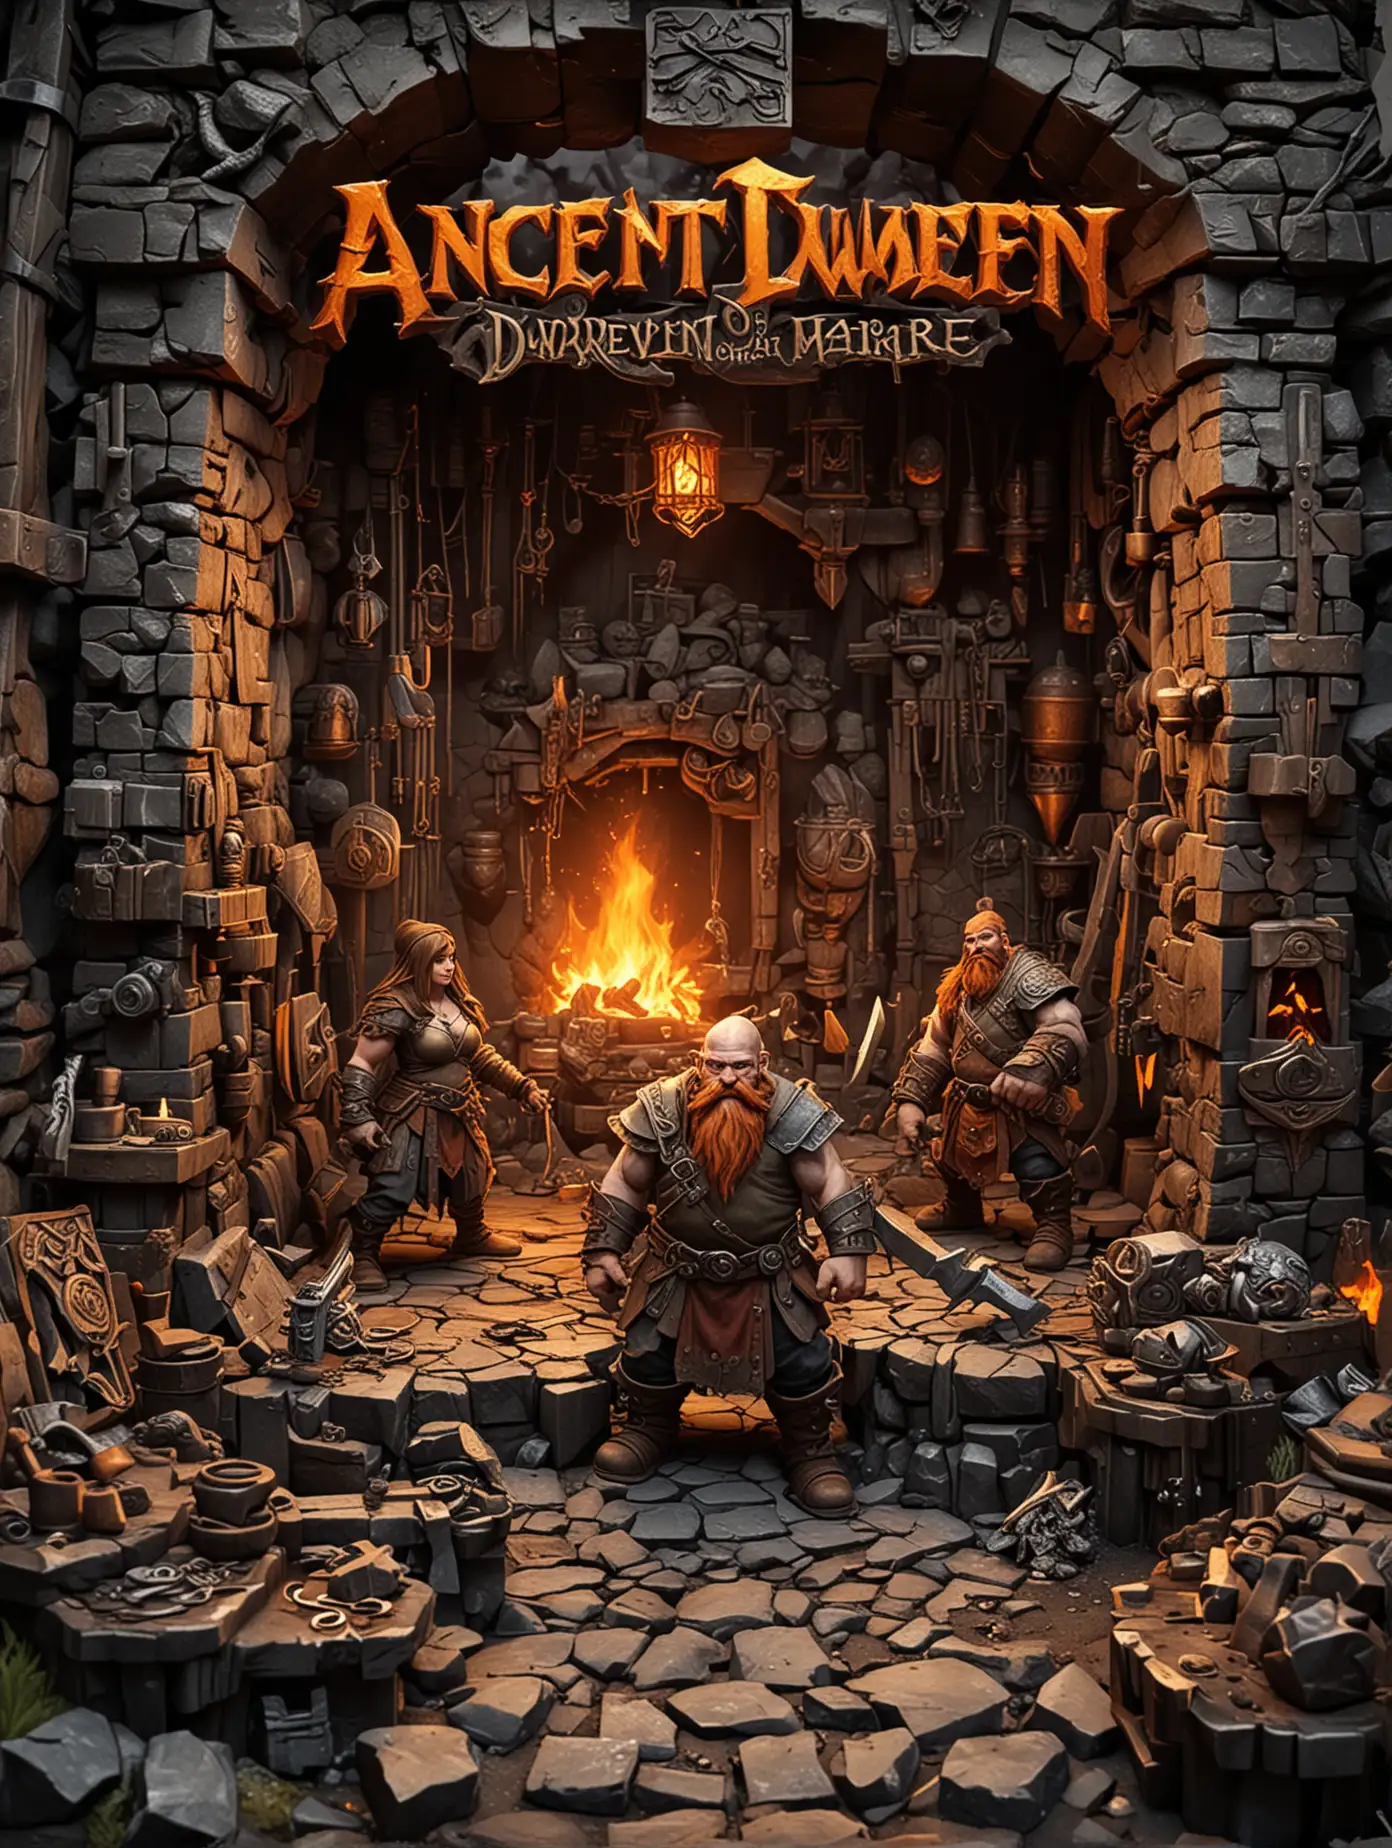 Fantasy Dwarf Blacksmith Crafting Legendary Gear in Ancient Mountain Forge